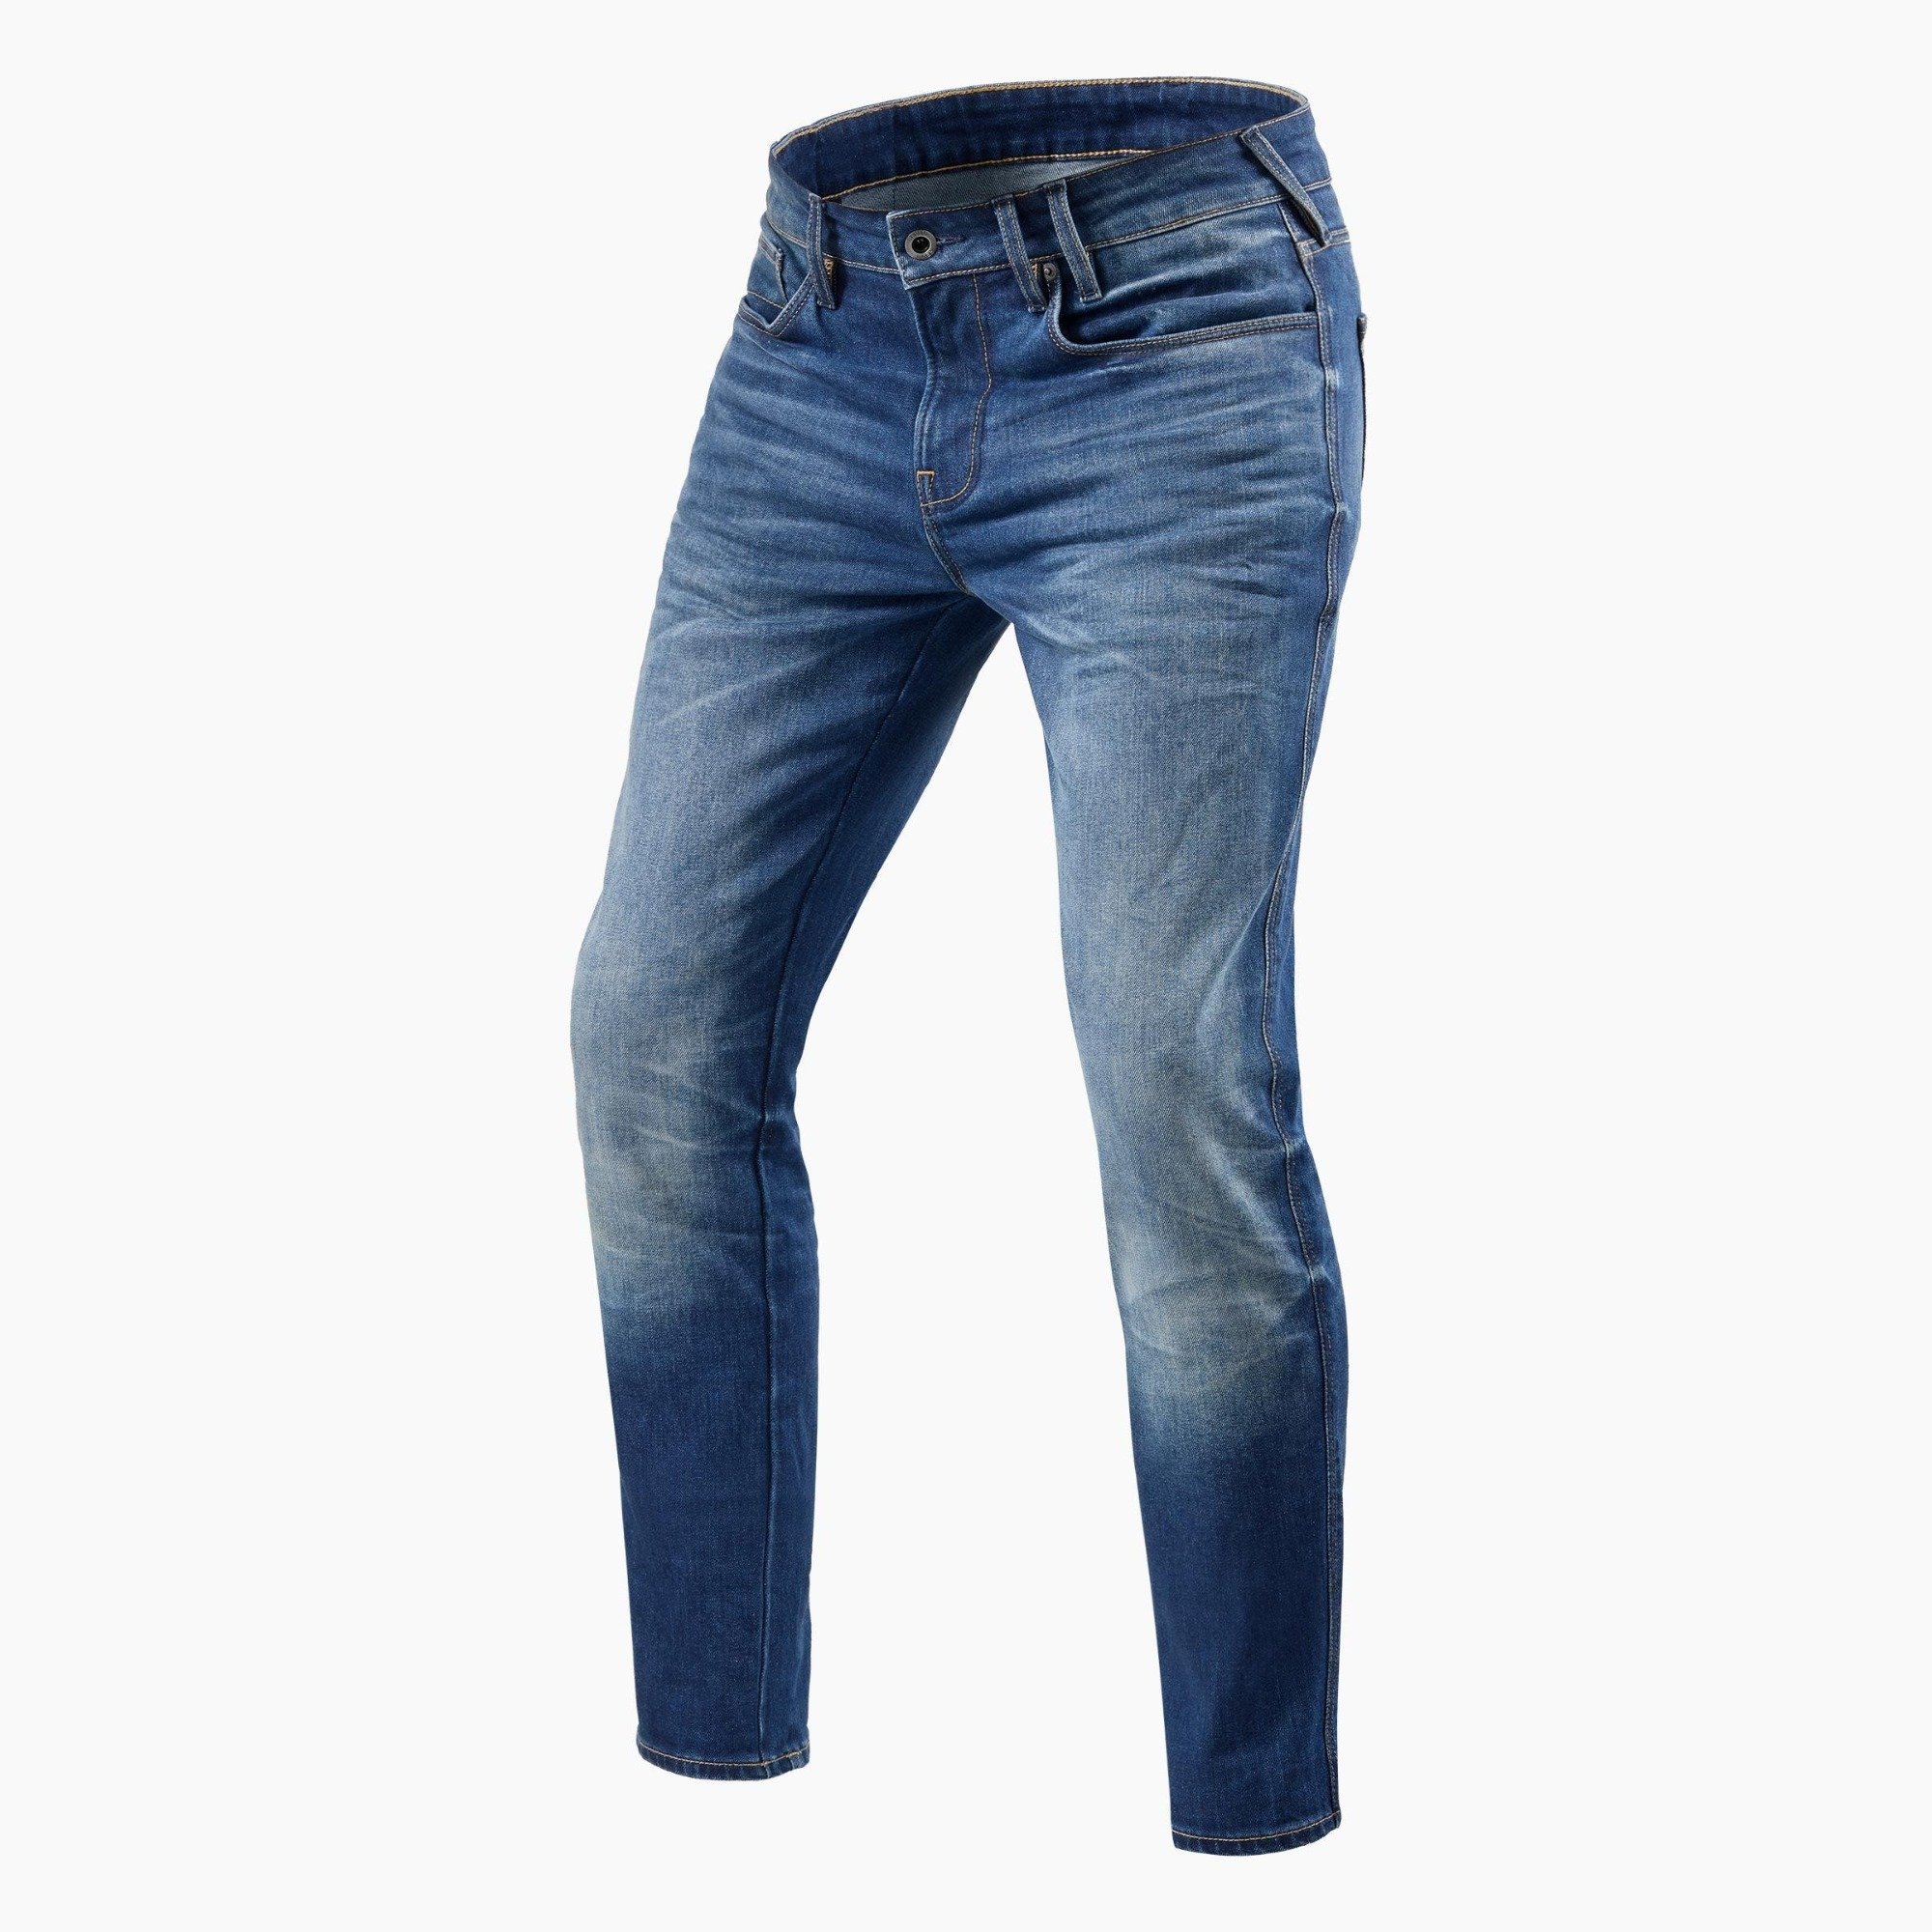 Image of REV'IT! Jeans Carlin SK Mid Blue Used Motorcycle Jeans Size L34/W31 EN